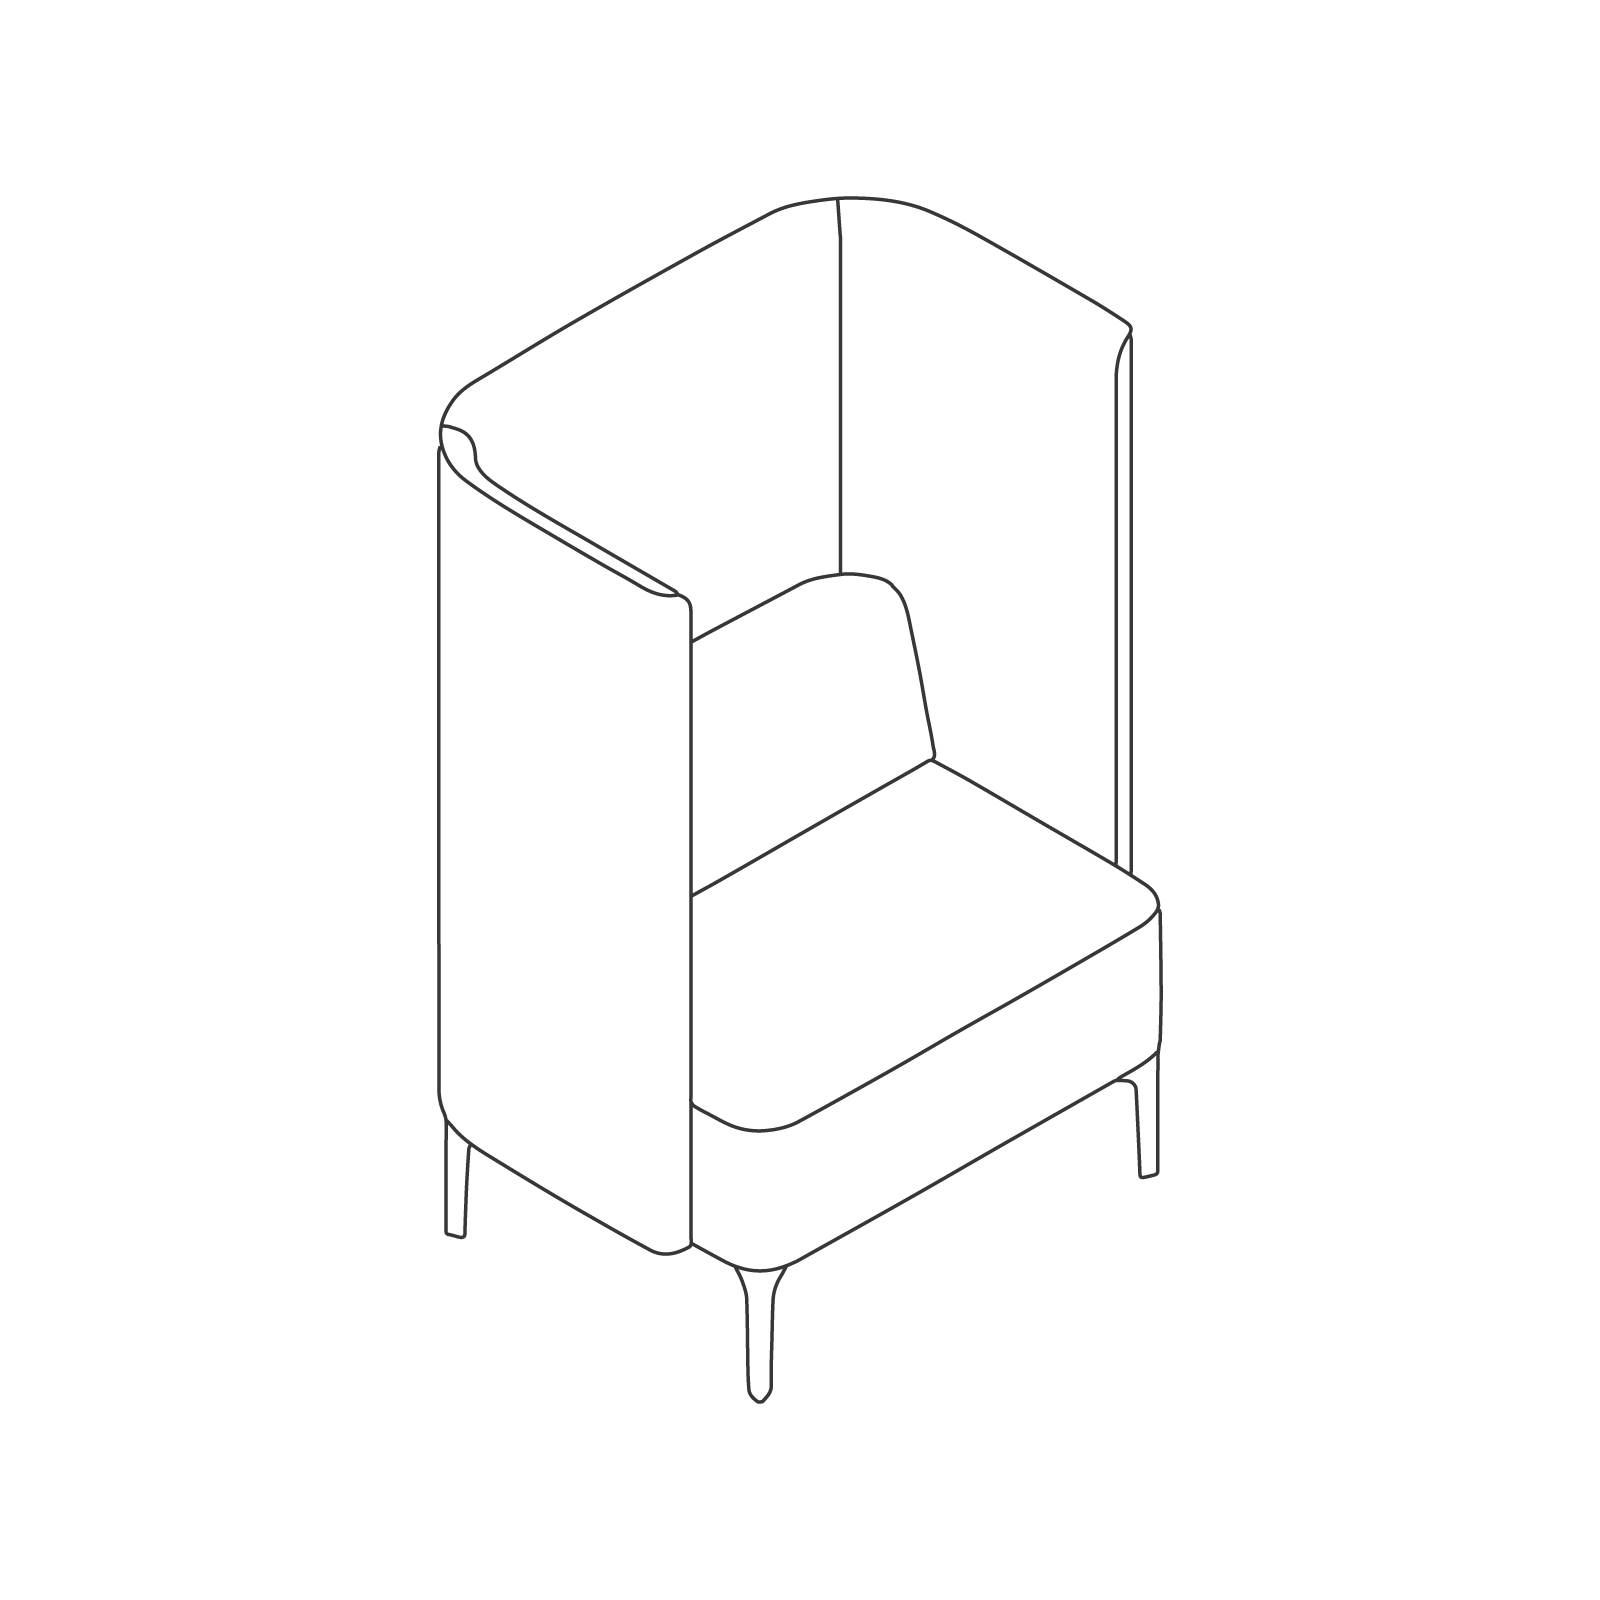 A line drawing - Pullman Chair–4-Leg Base